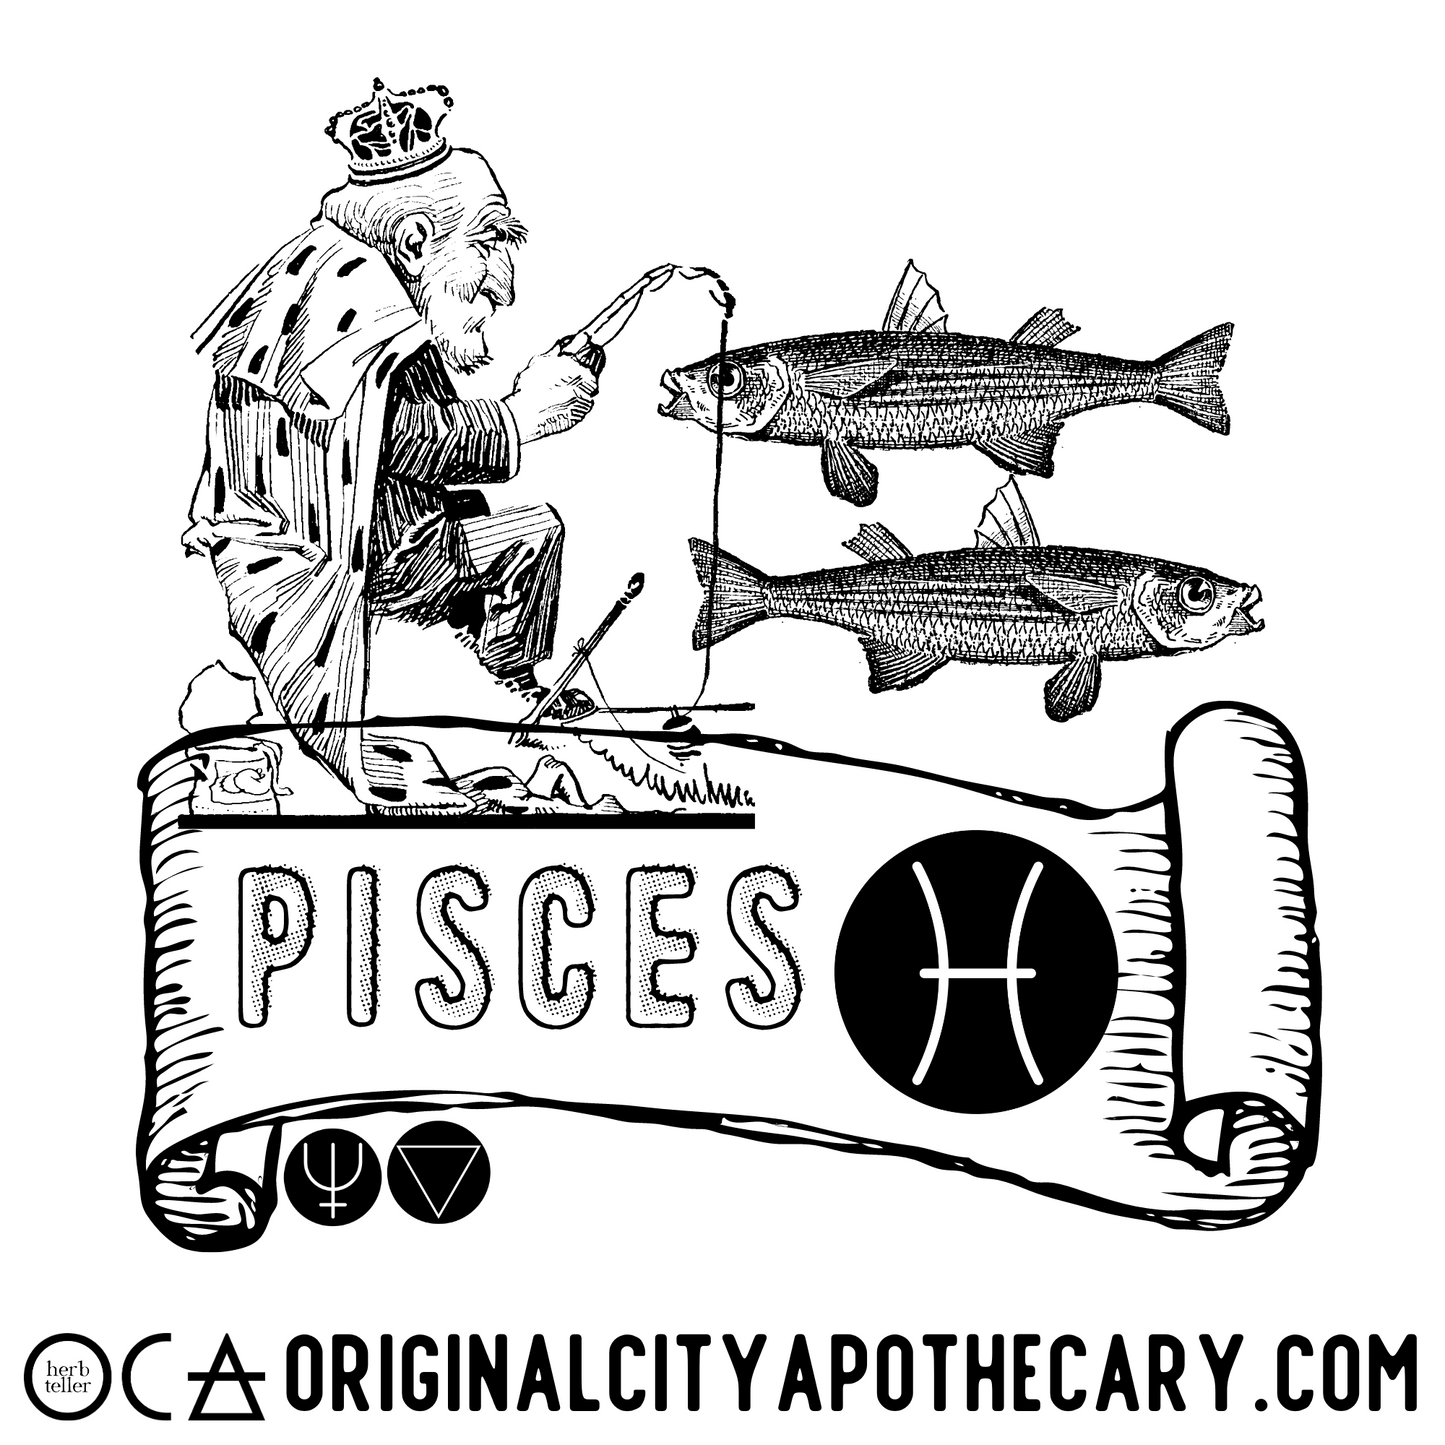 Pisces Oil/Perfume